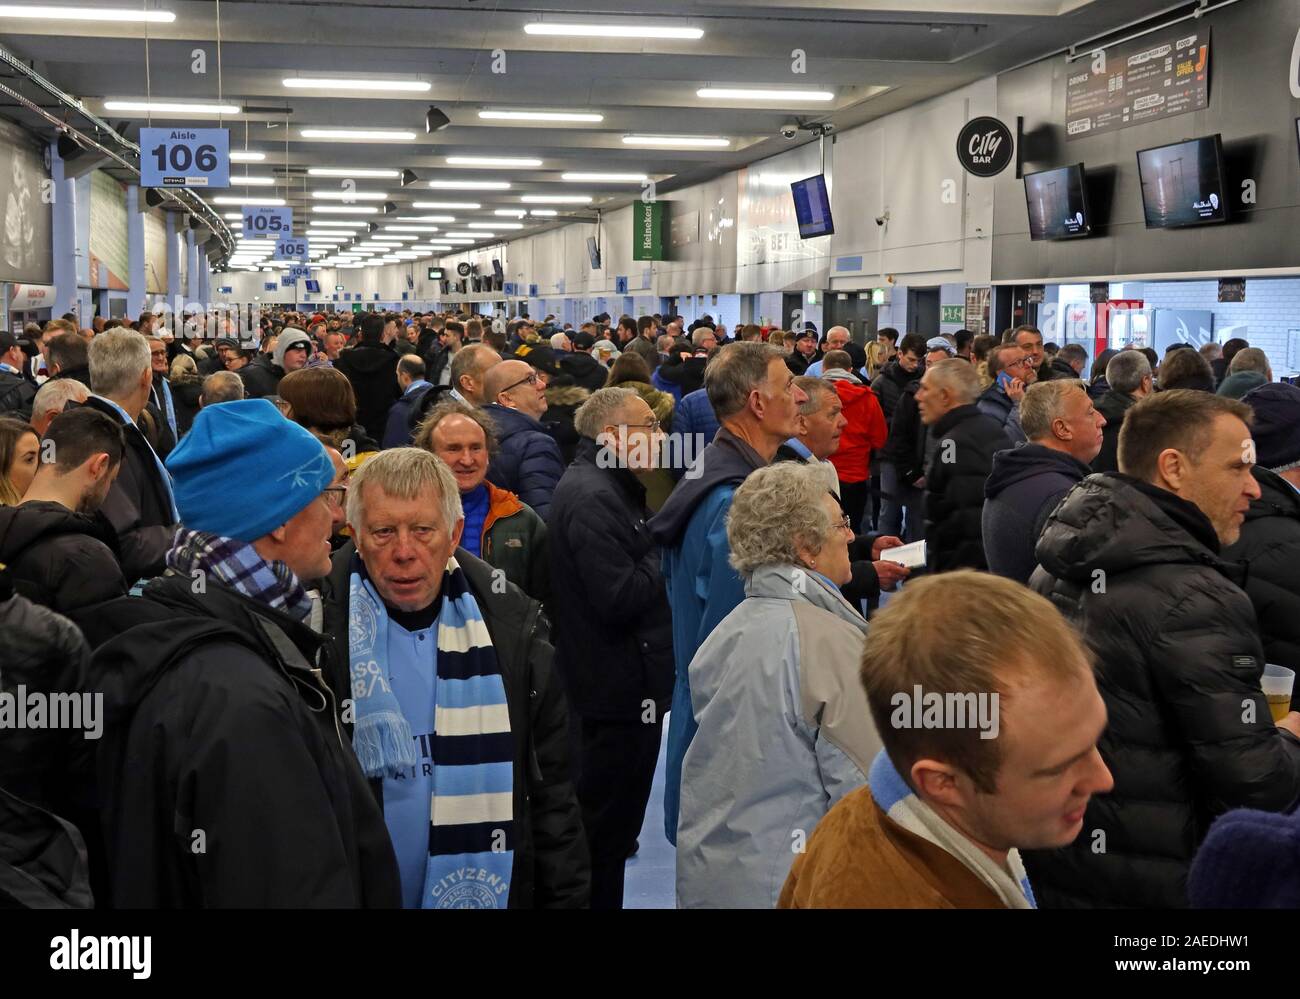 MCFC supporters,  Etihad stadium, Manchester City Football Club, match Stock Photo